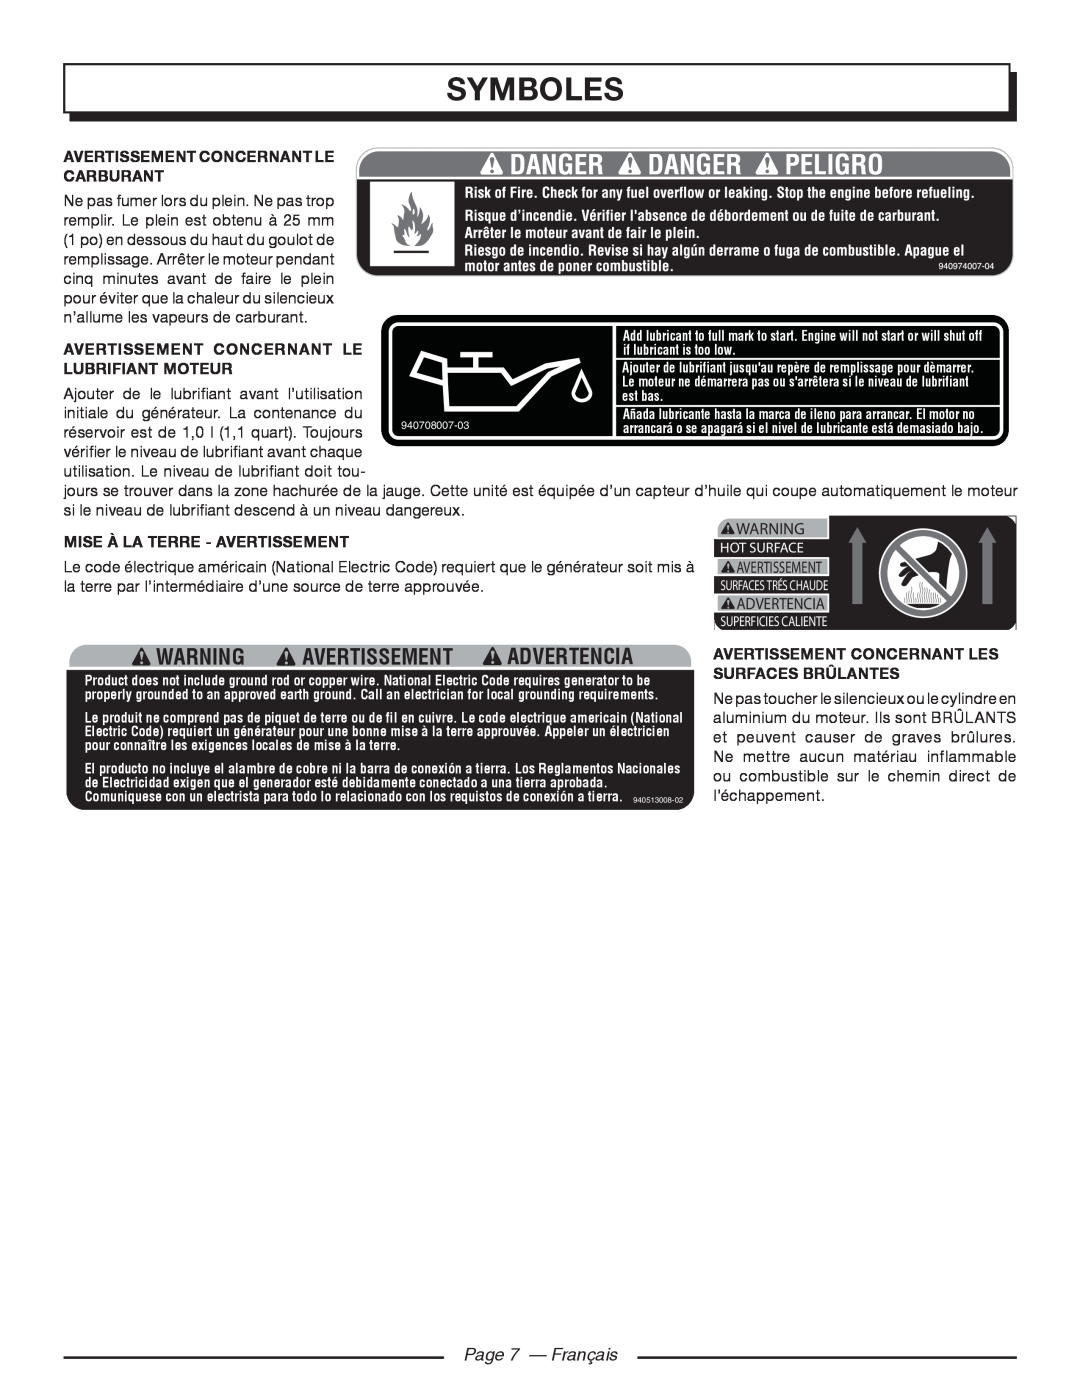 Homelite HGCA5700 Page 7 — Français, Symboles, Warning Avertissement Advertencia, Avertissement Concernant Le Carburant 